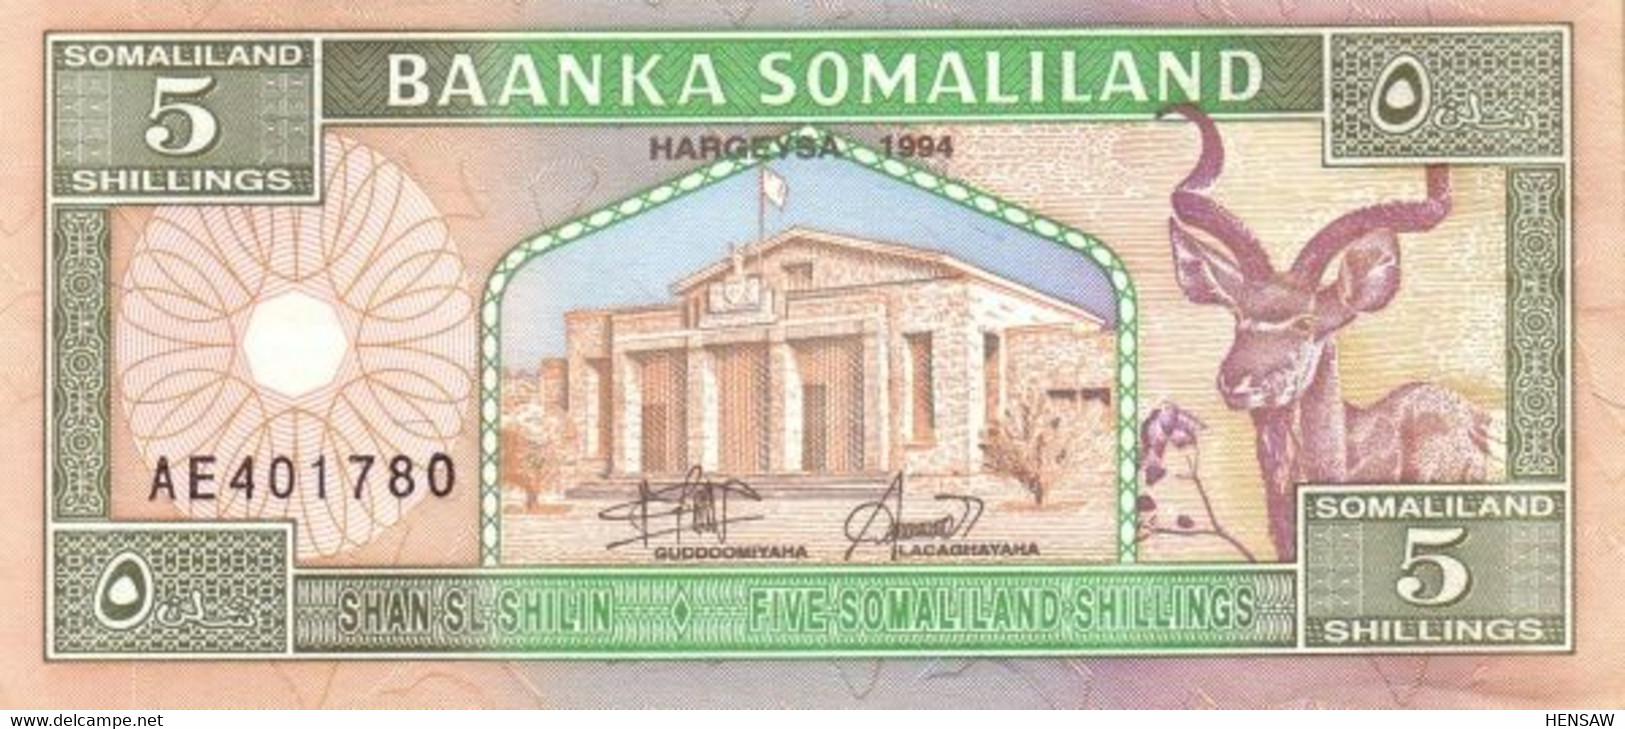 SOMALILAND 5 SHILLINGS 1994 P 1 UNC SC NUEVO - Somalia